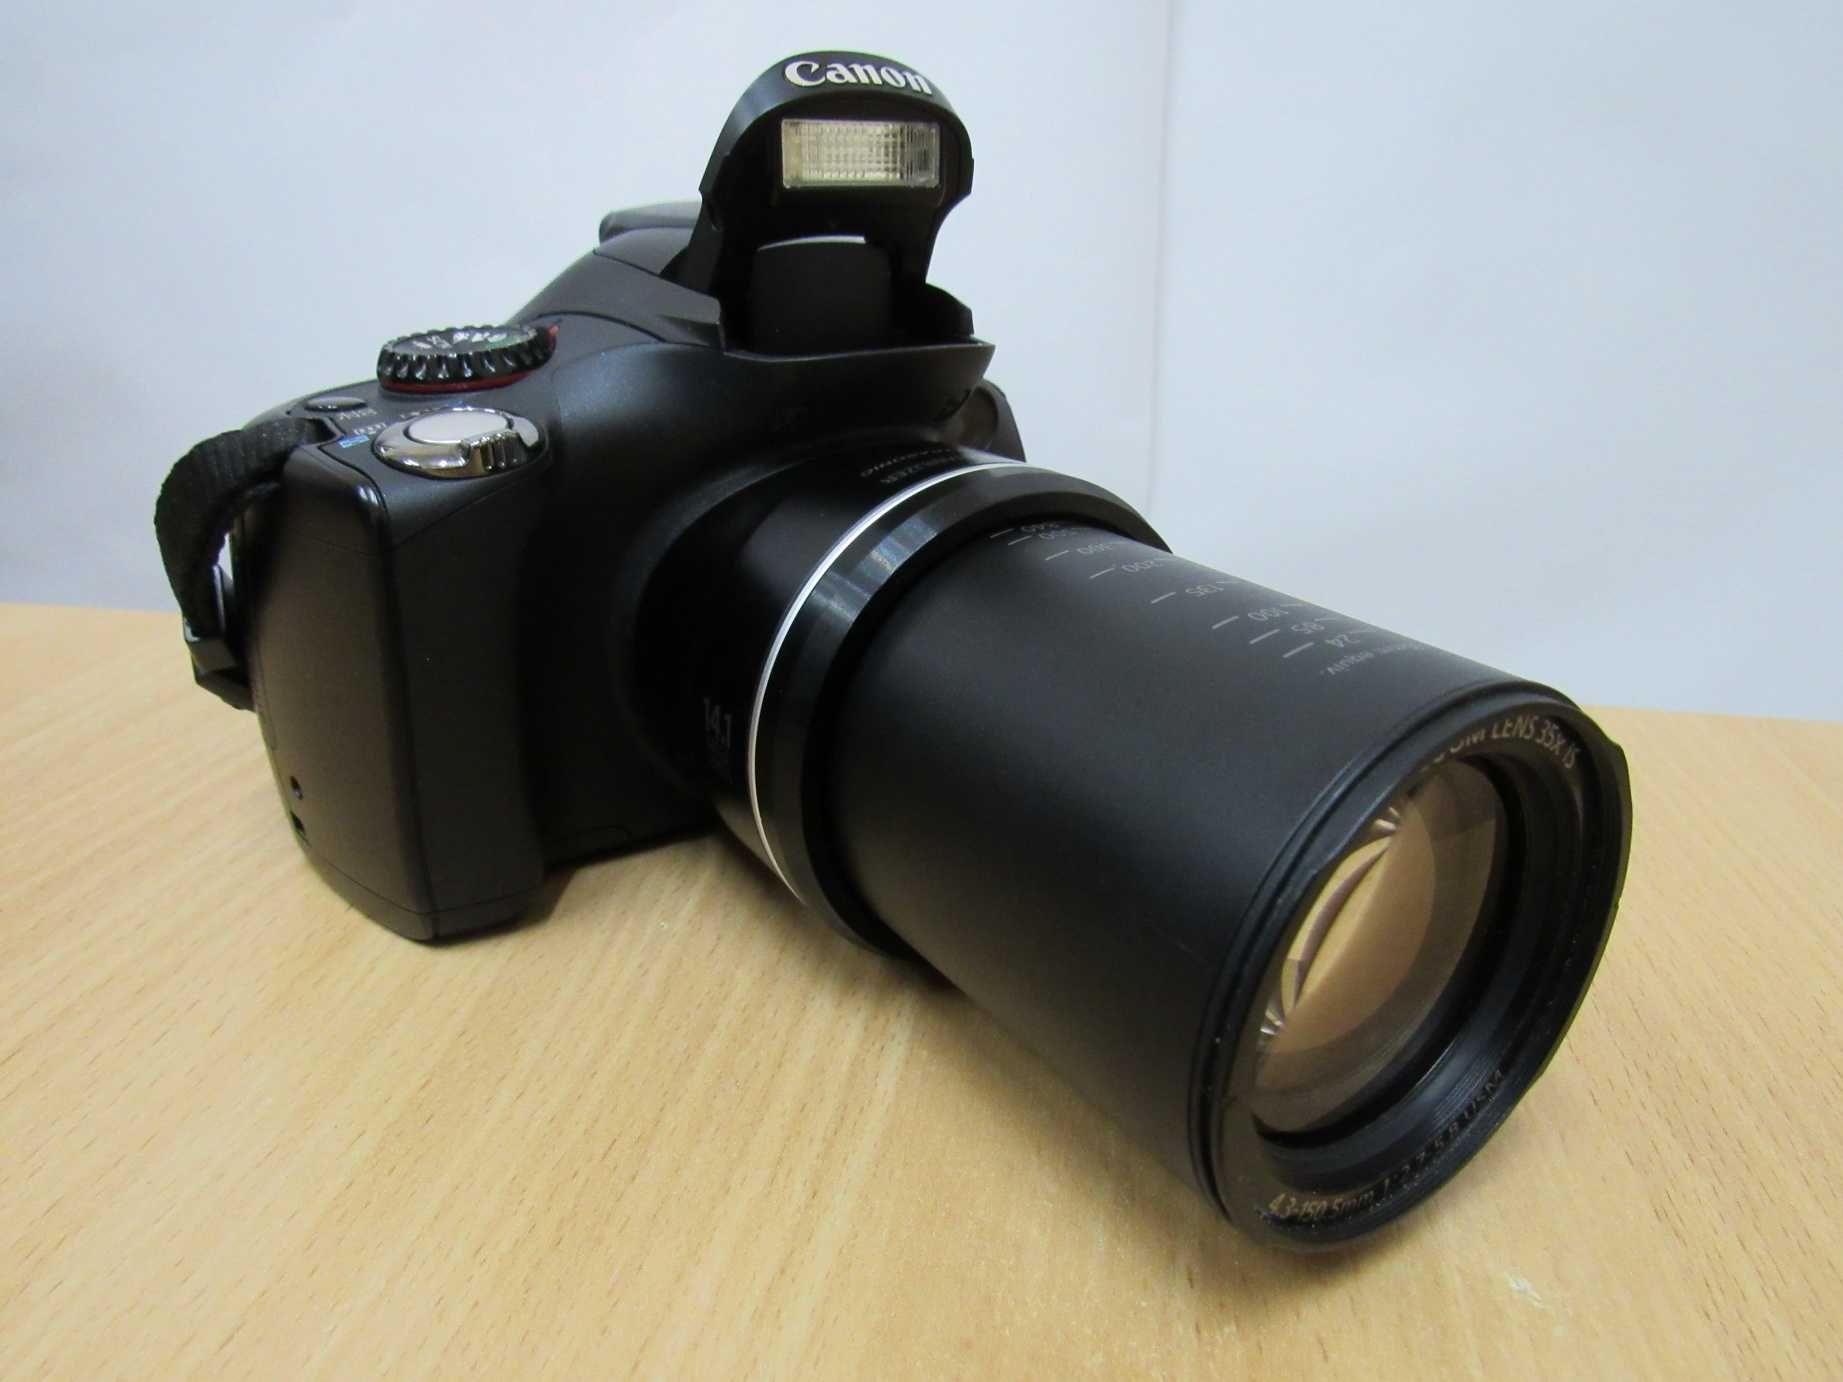 Цифровий фотоапарат Canon SX30 IS+Сумка+КП 8 Гб